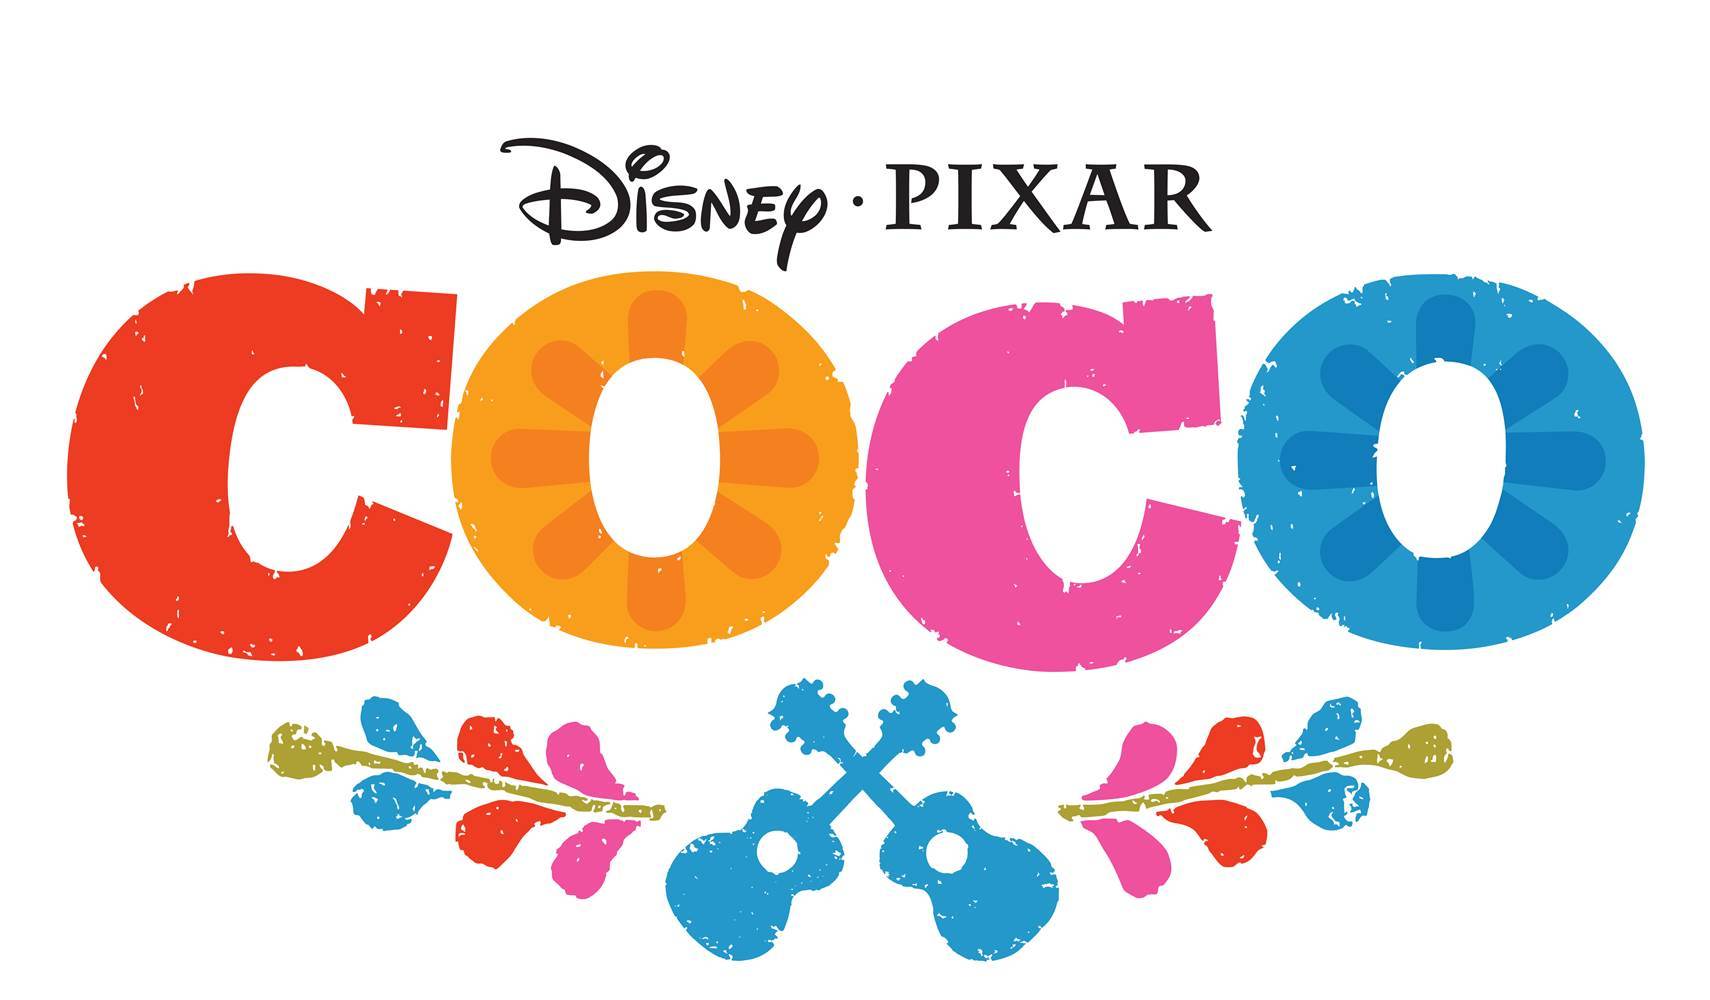 Disney Pixar Films Logo - Coco Movie Image - first look at Miguel from Disney PIxar's 2017 film